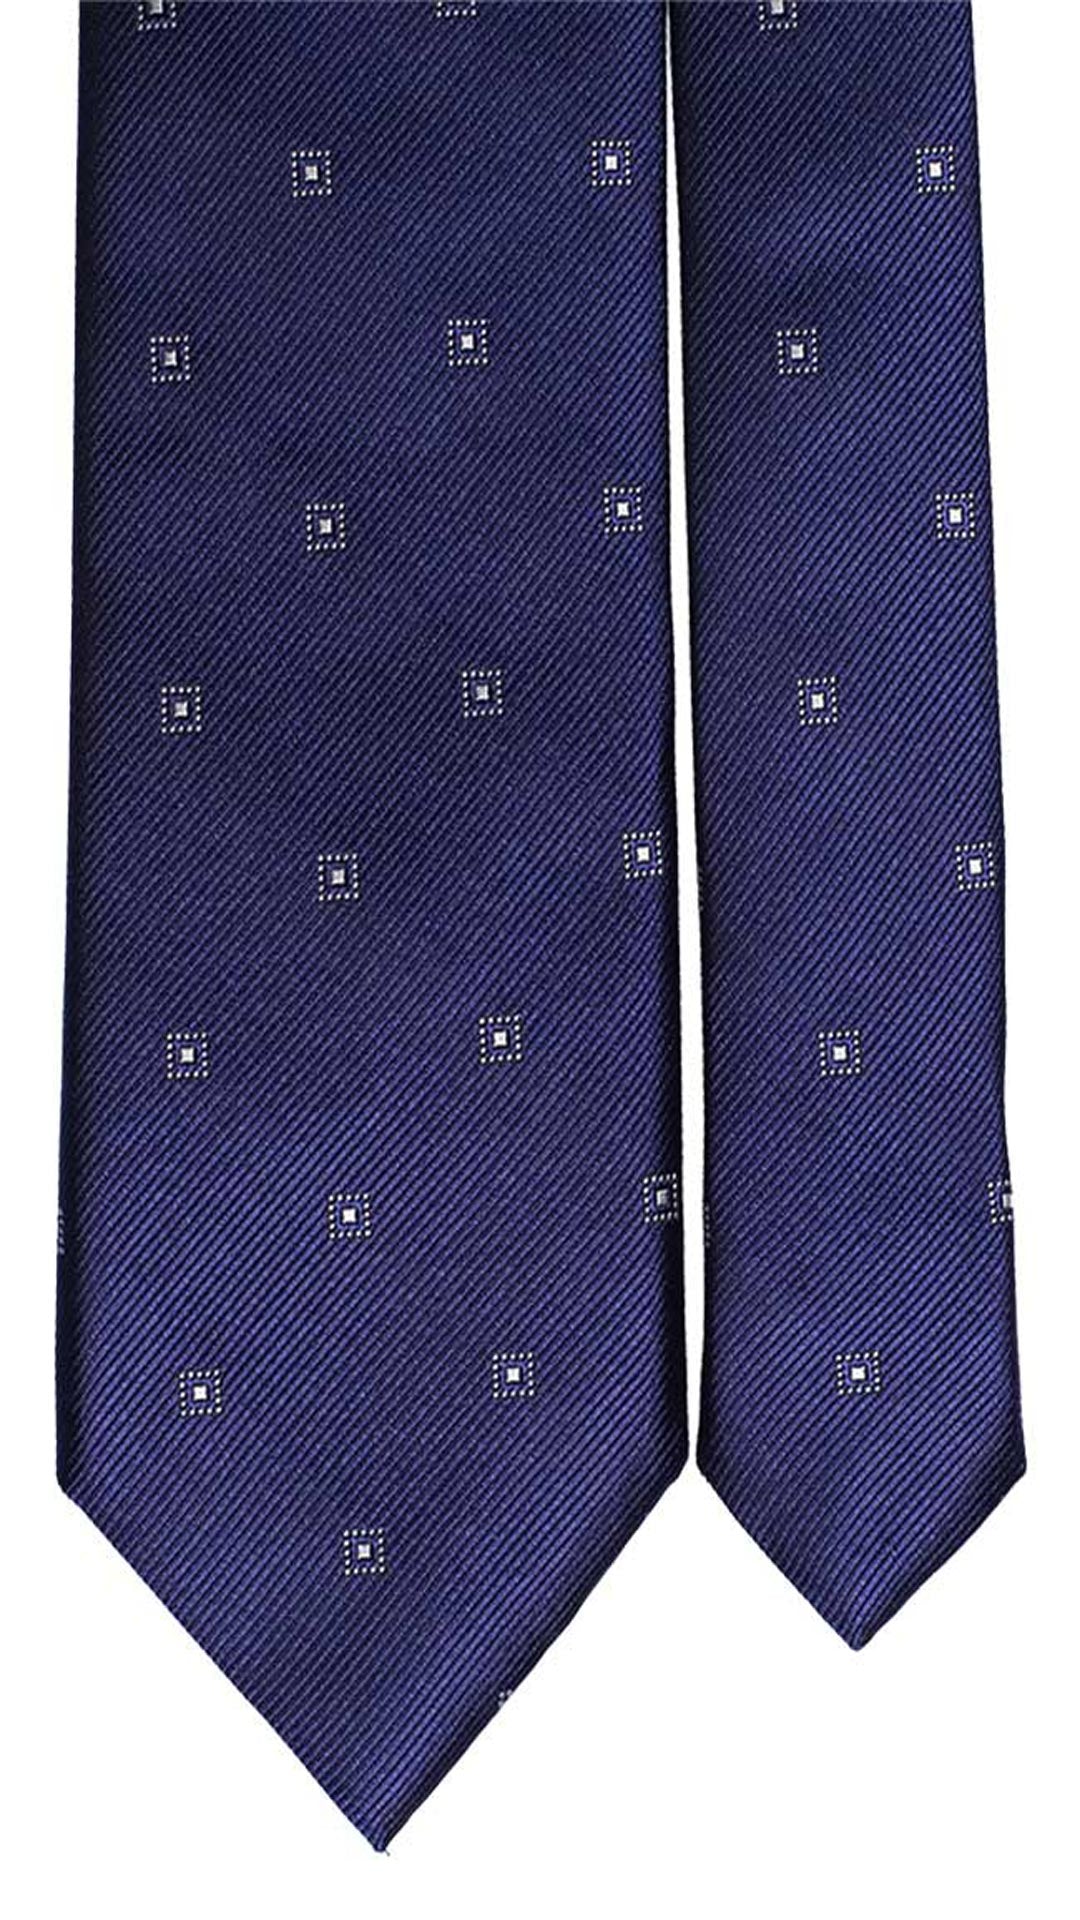 Cravatta da Cerimonia di Seta Blu Navy Fantasia Bianca CY2748 Pala